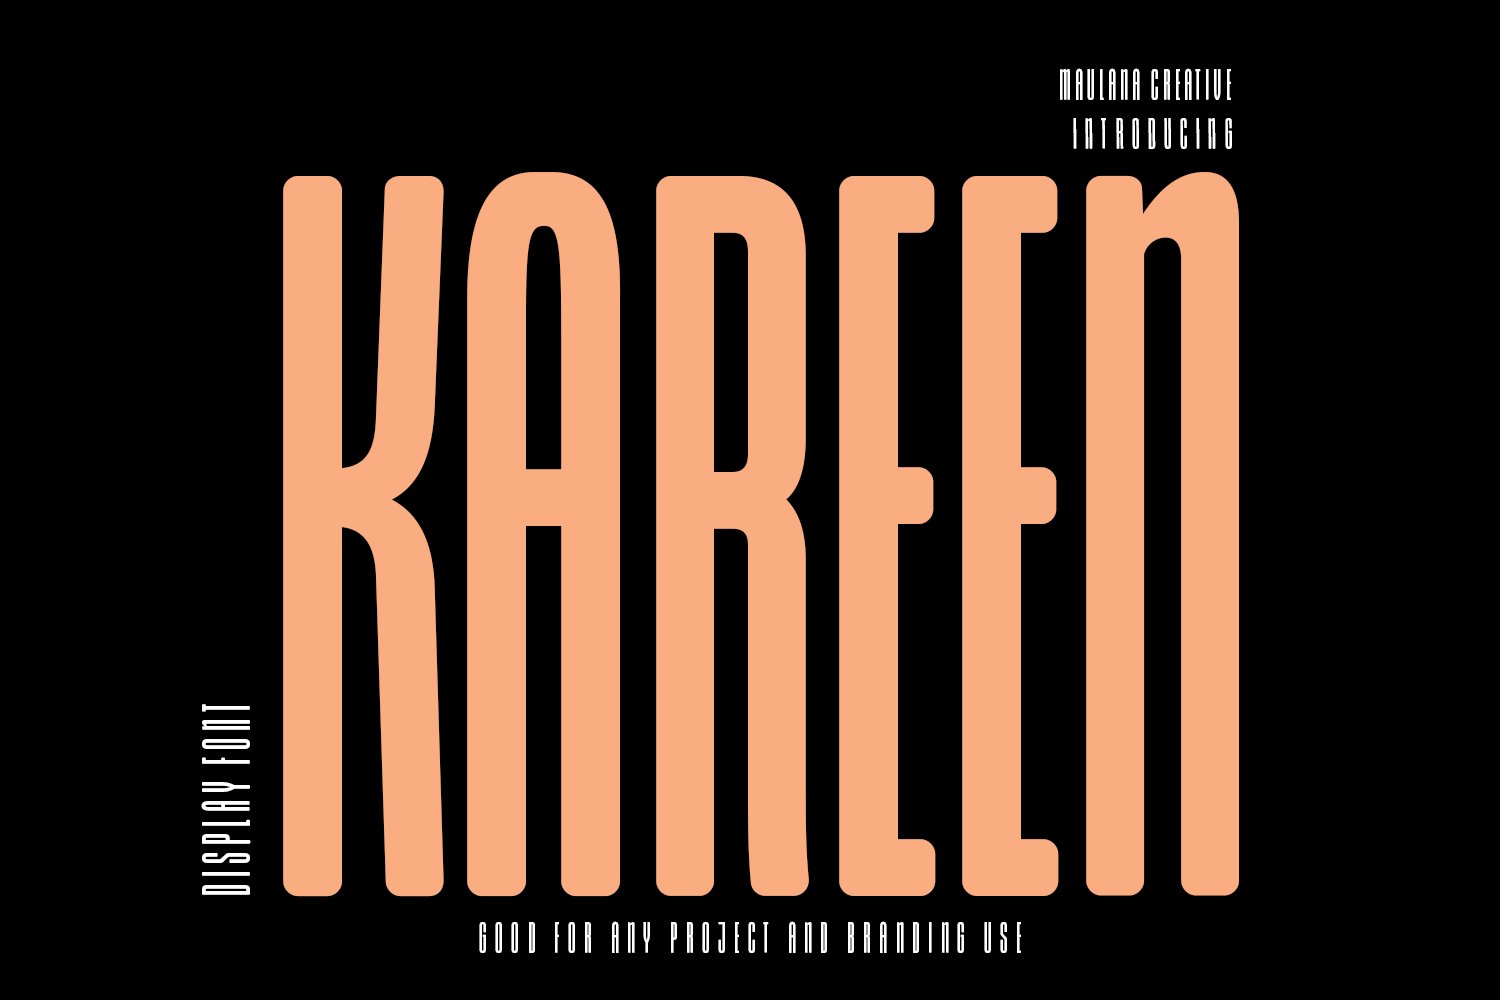 Kareen Sans Serif Display Font cover image.